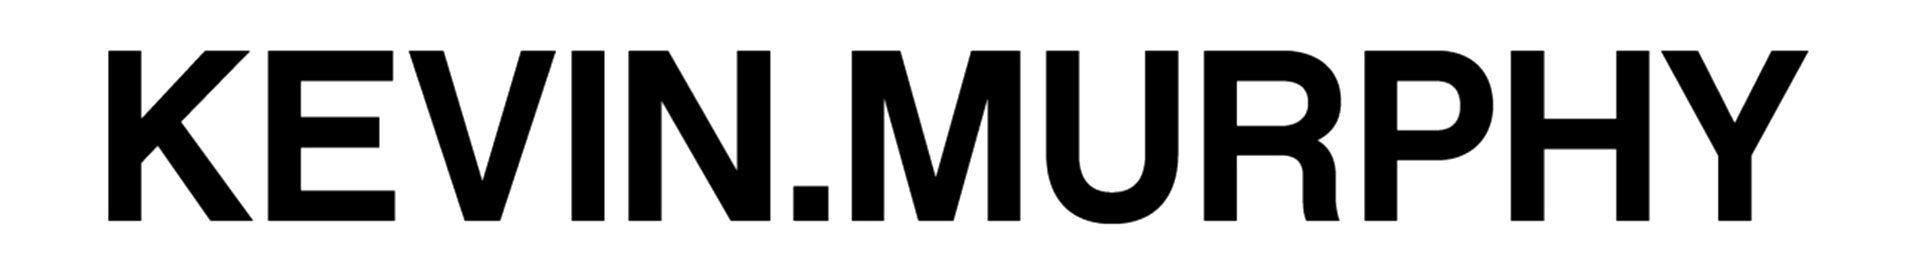 logo-kevin-murphy.png